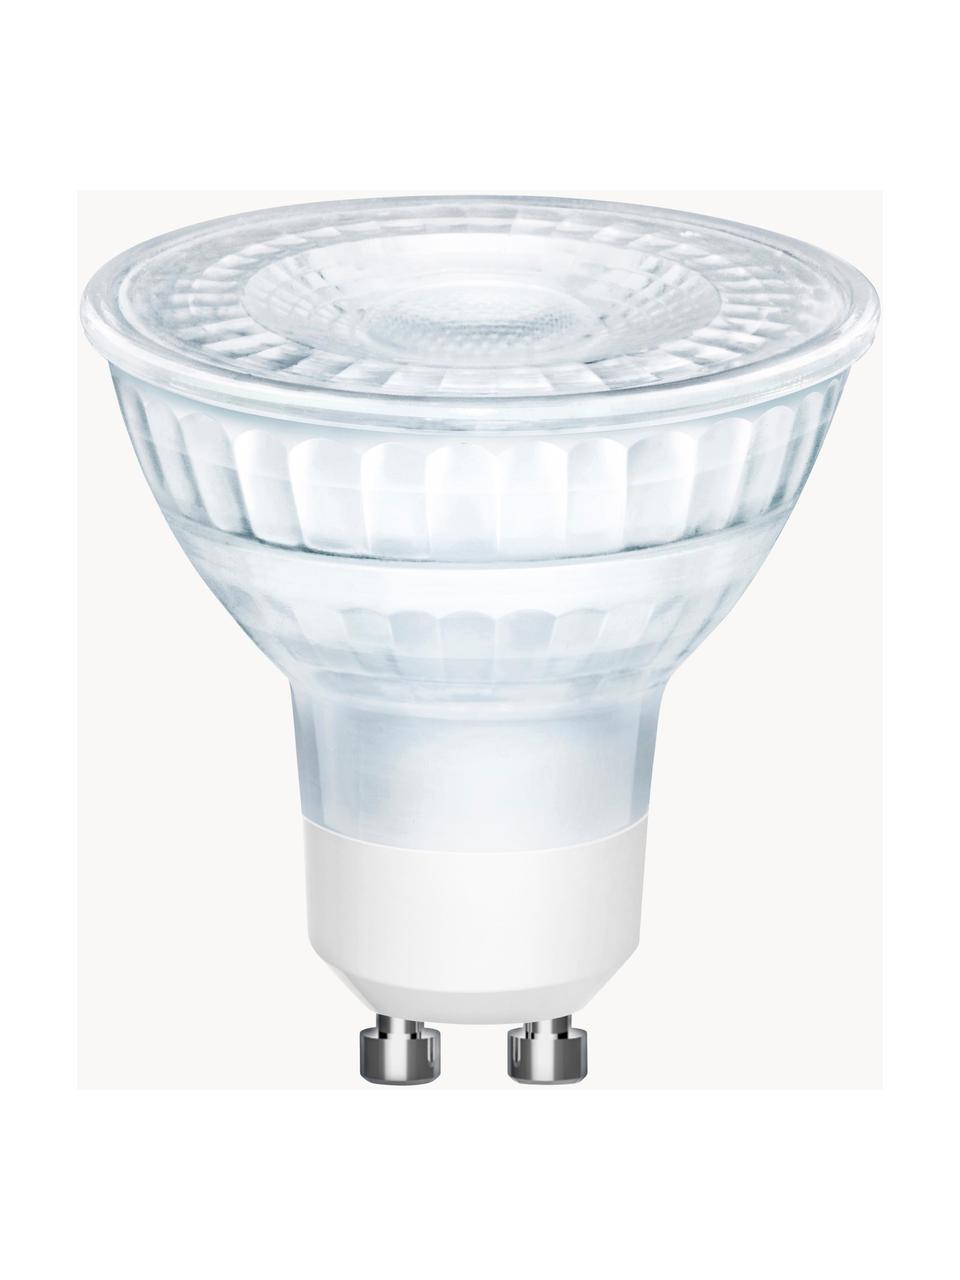 GU10 Leuchtmittel, dimmbar, warmweiß, 6 Stück, Leuchtmittelschirm: Glas, Leuchtmittelfassung: Aluminium, Transparent, Ø 5 x H 6 cm